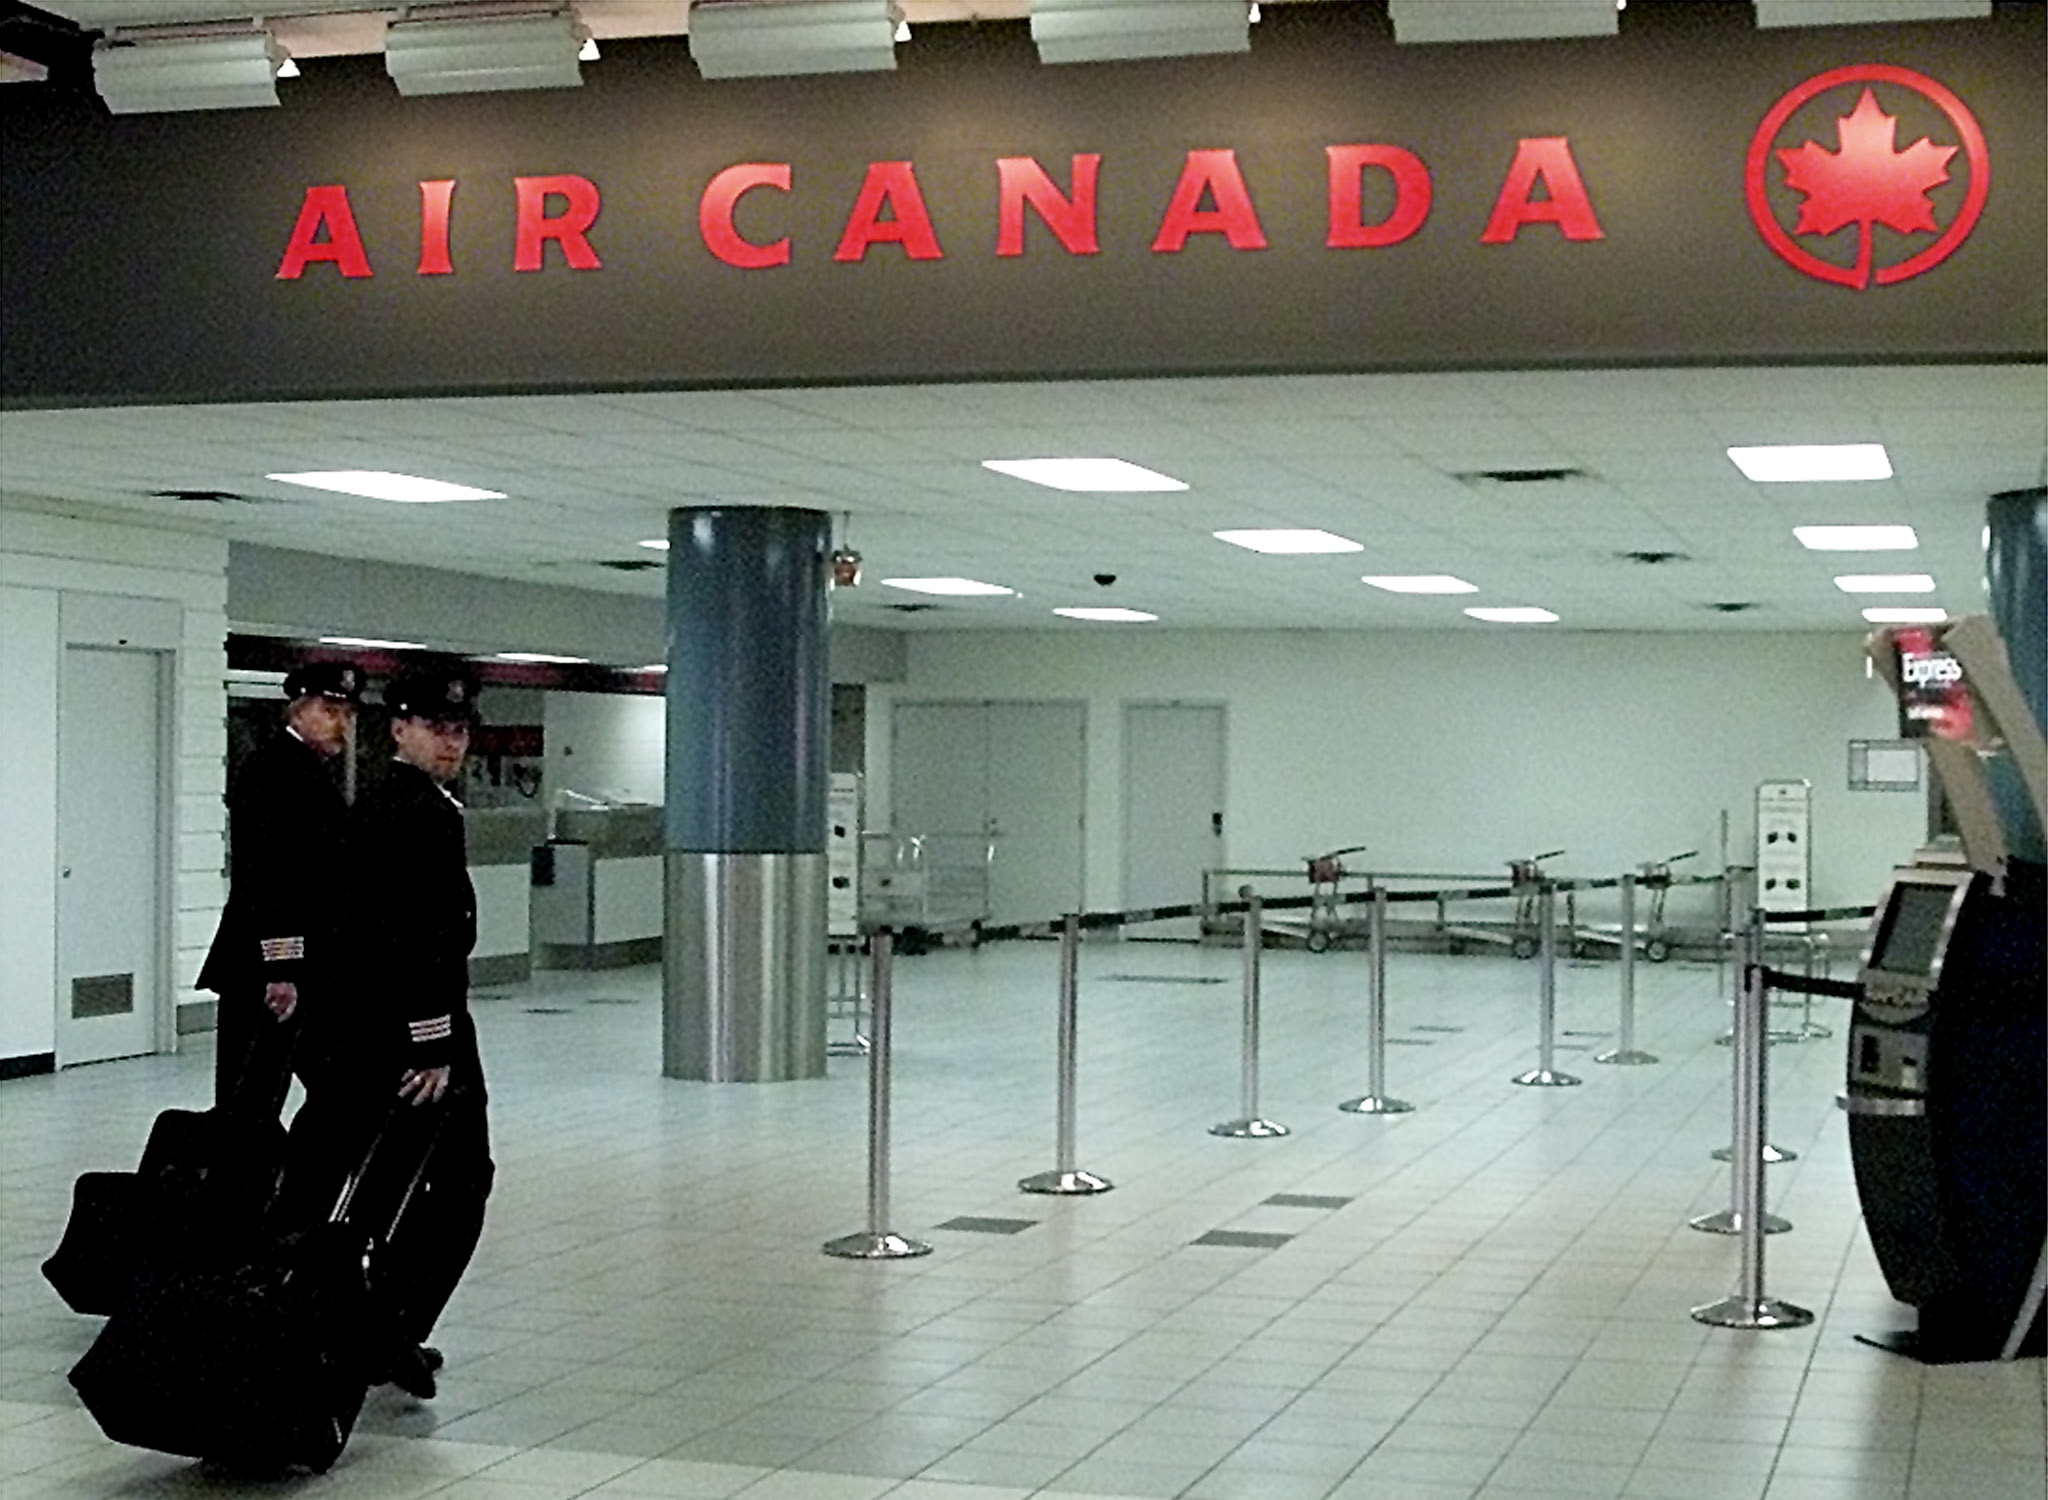 Air Canada pilots walk towards their gate at Toronto's Pearson International Airport